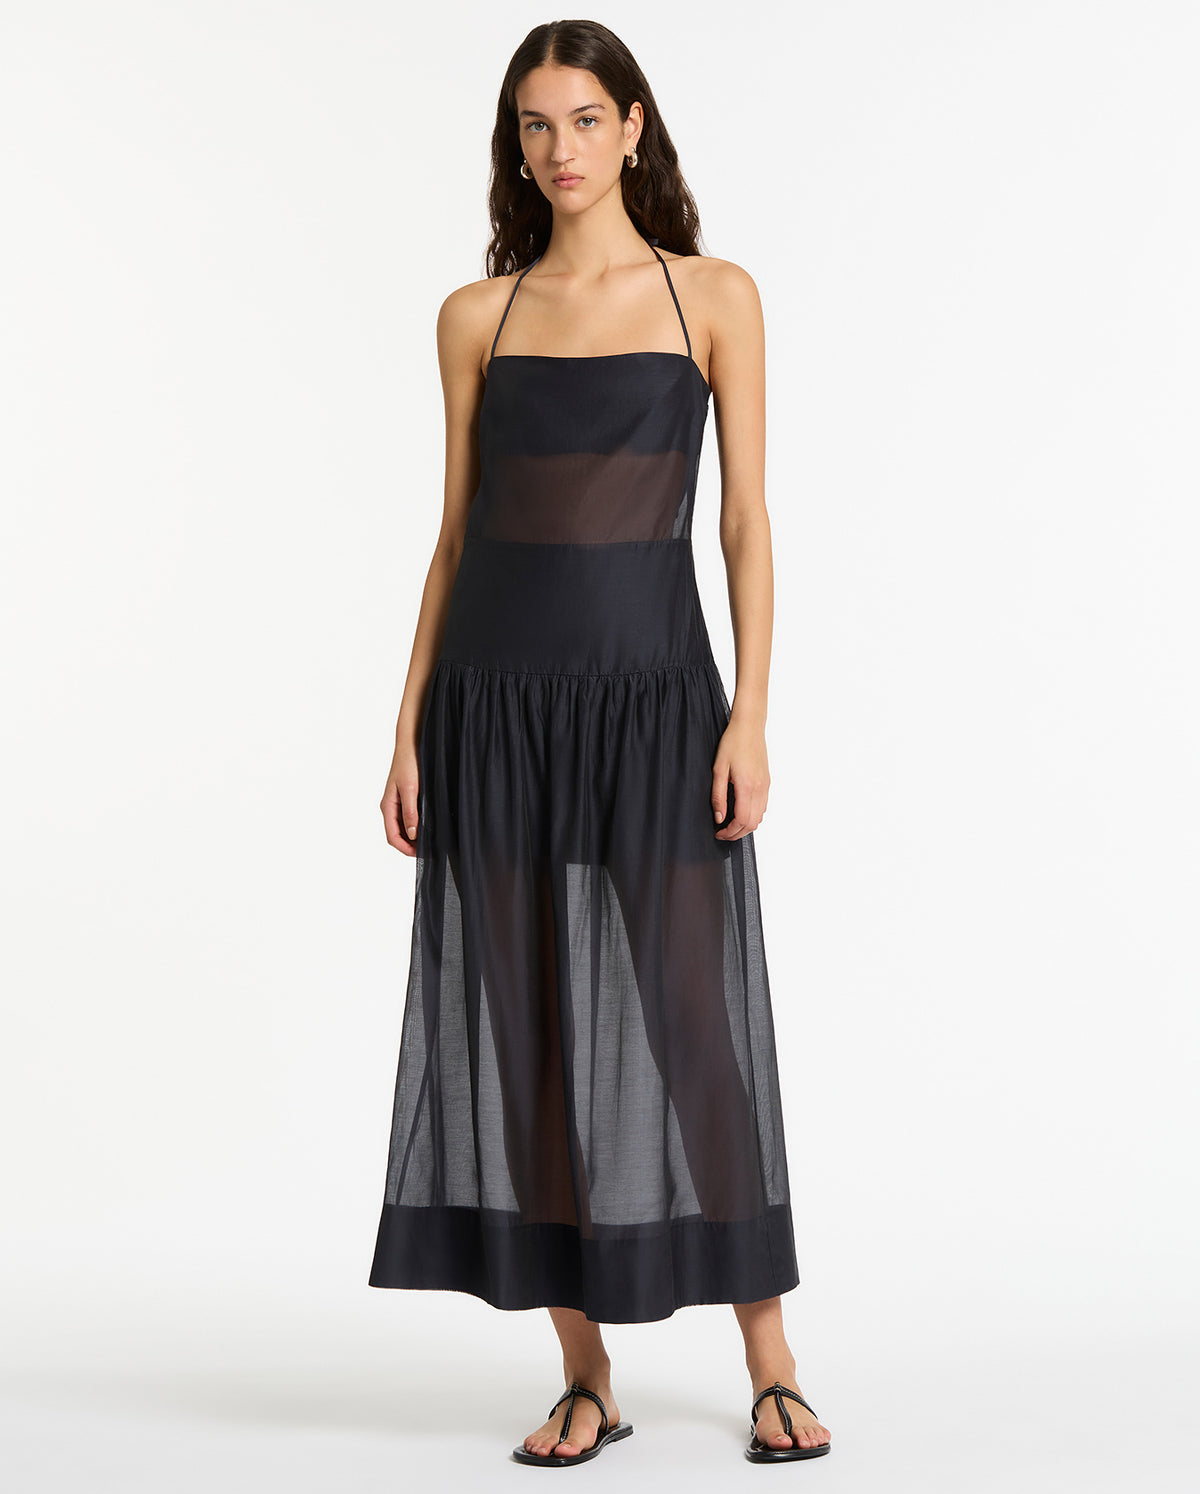 Assemblage Strapless Maxi Dress - Black